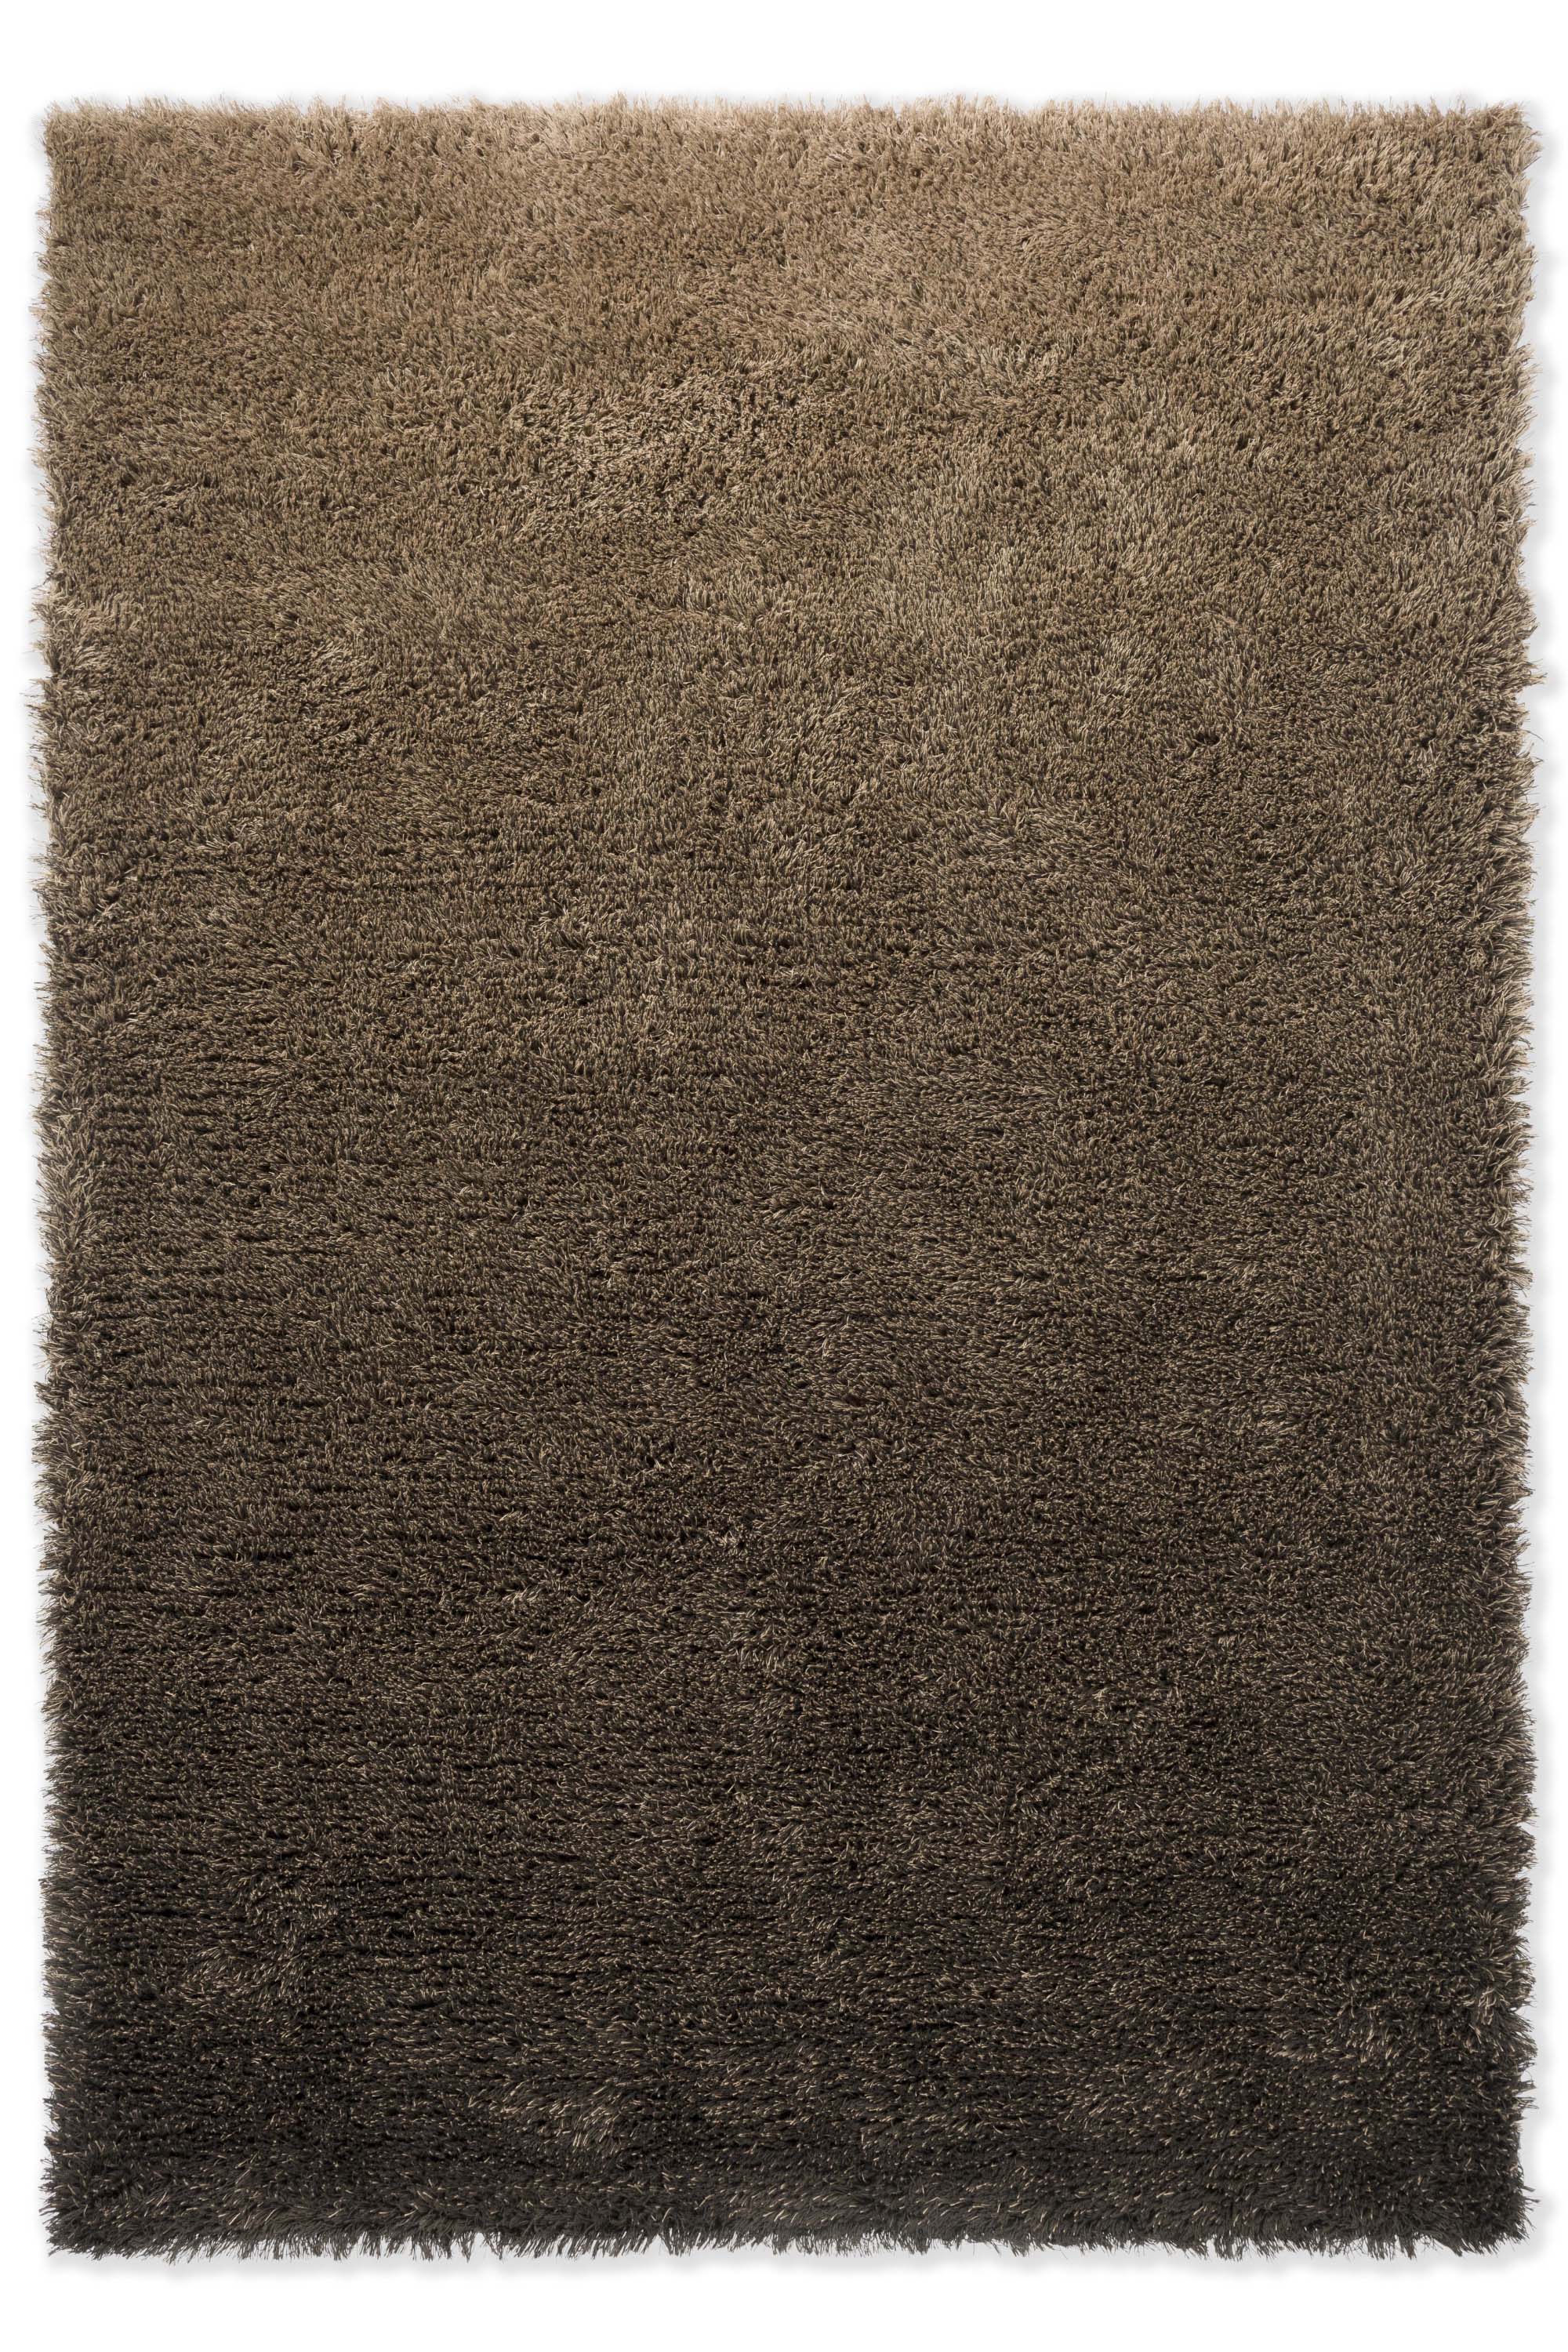 Plain brown rug with shaggy pile